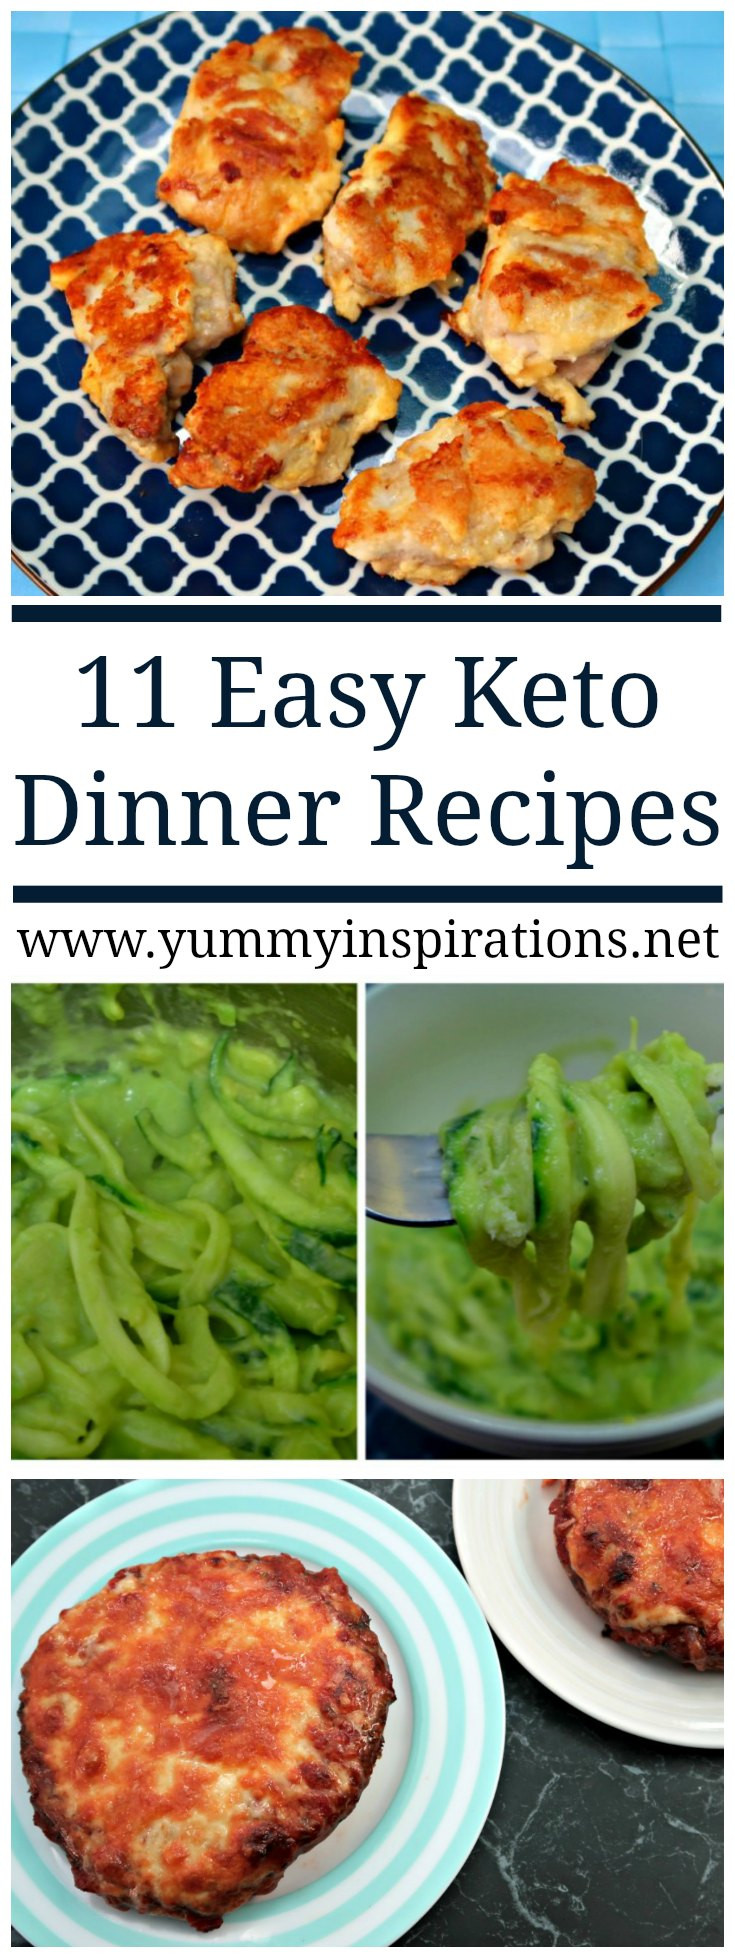 Fast Easy Keto Dinner
 11 Easy Keto Dinner Recipes Quick Low Carb Ketogenic